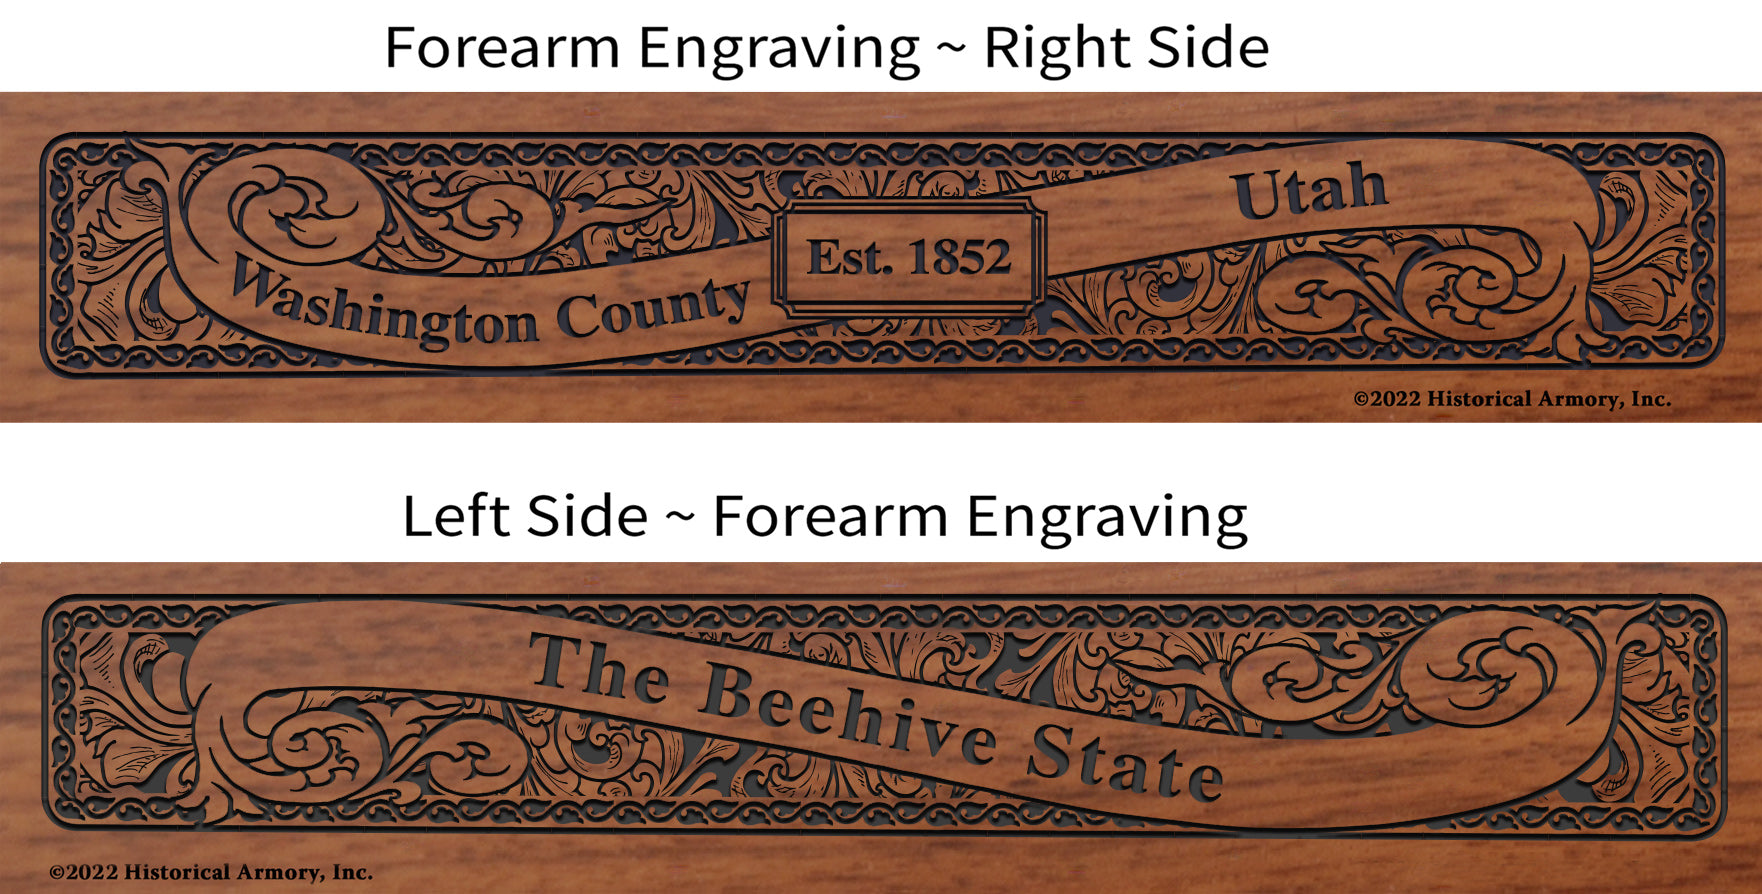 Washington County Utah Engraved Rifle Forearm